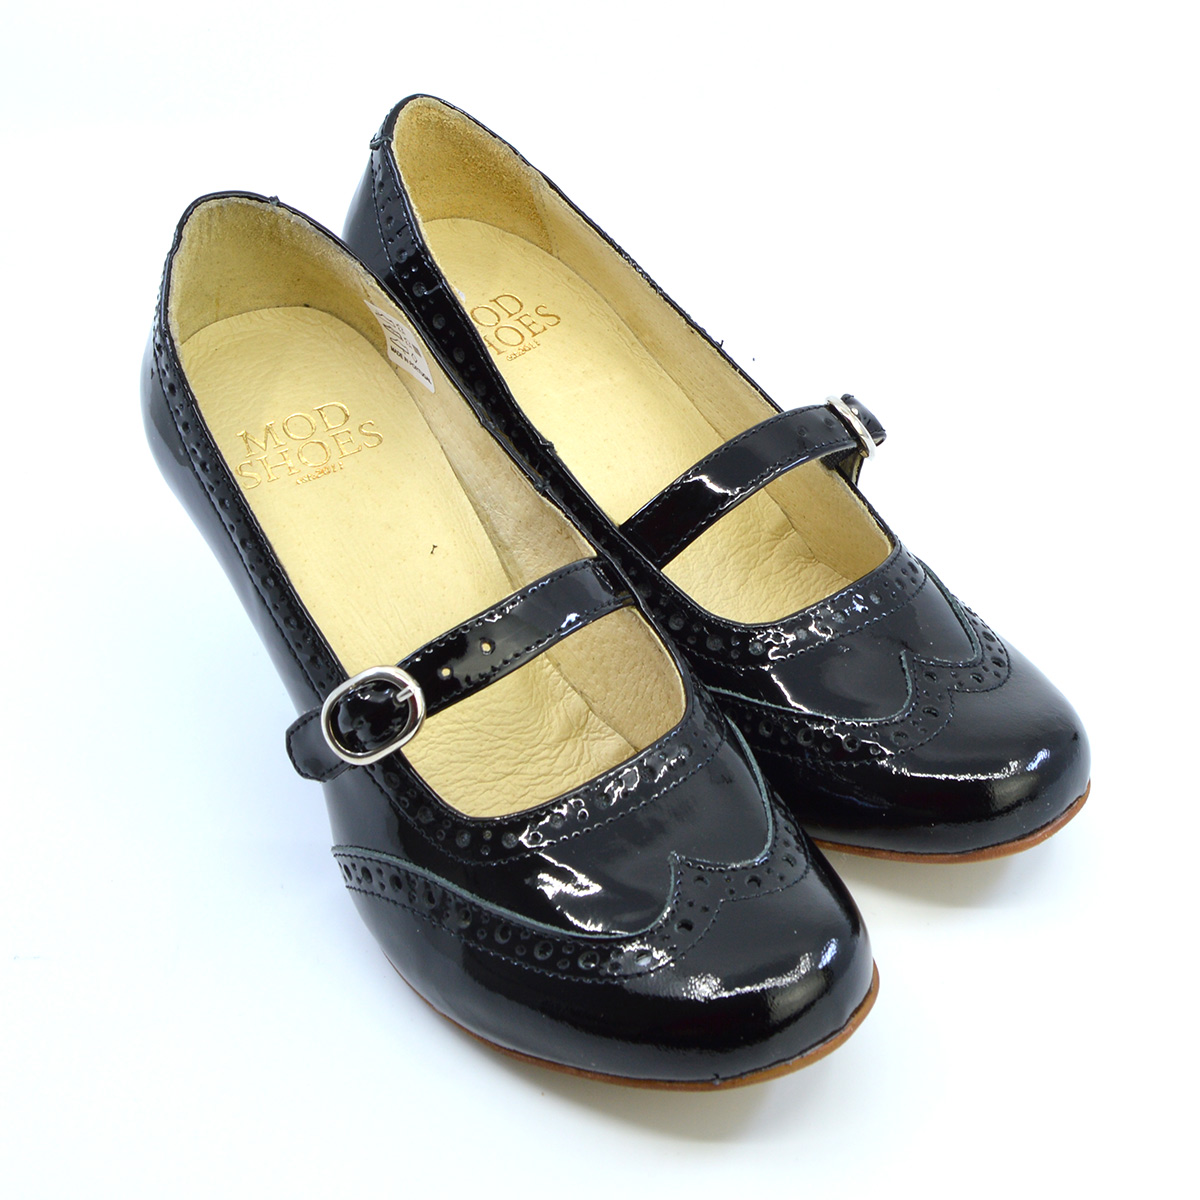 black patent leather shoes ladies